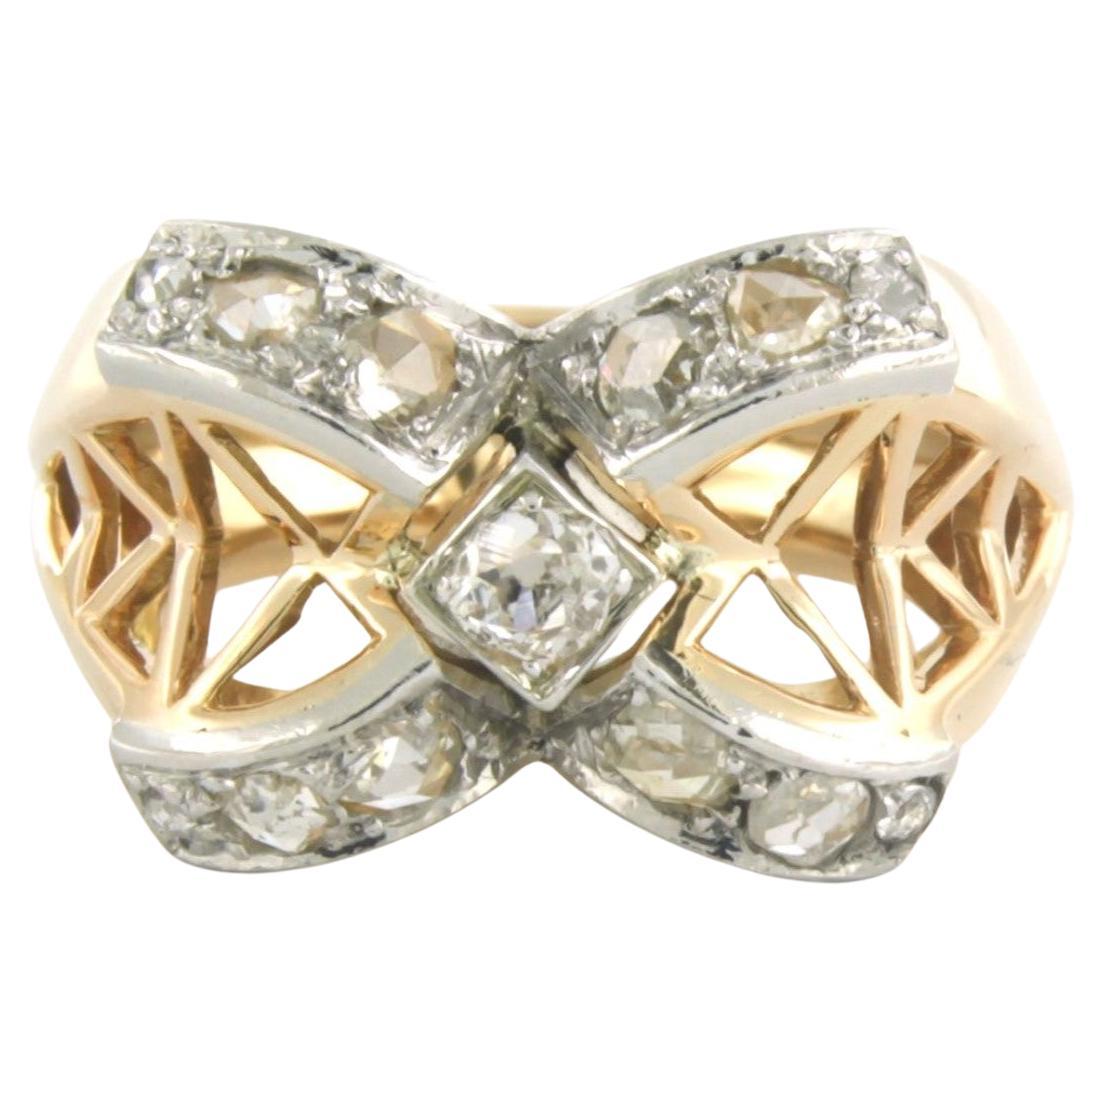 RETRO - Bague en or bicolore 18 carats avec diamants